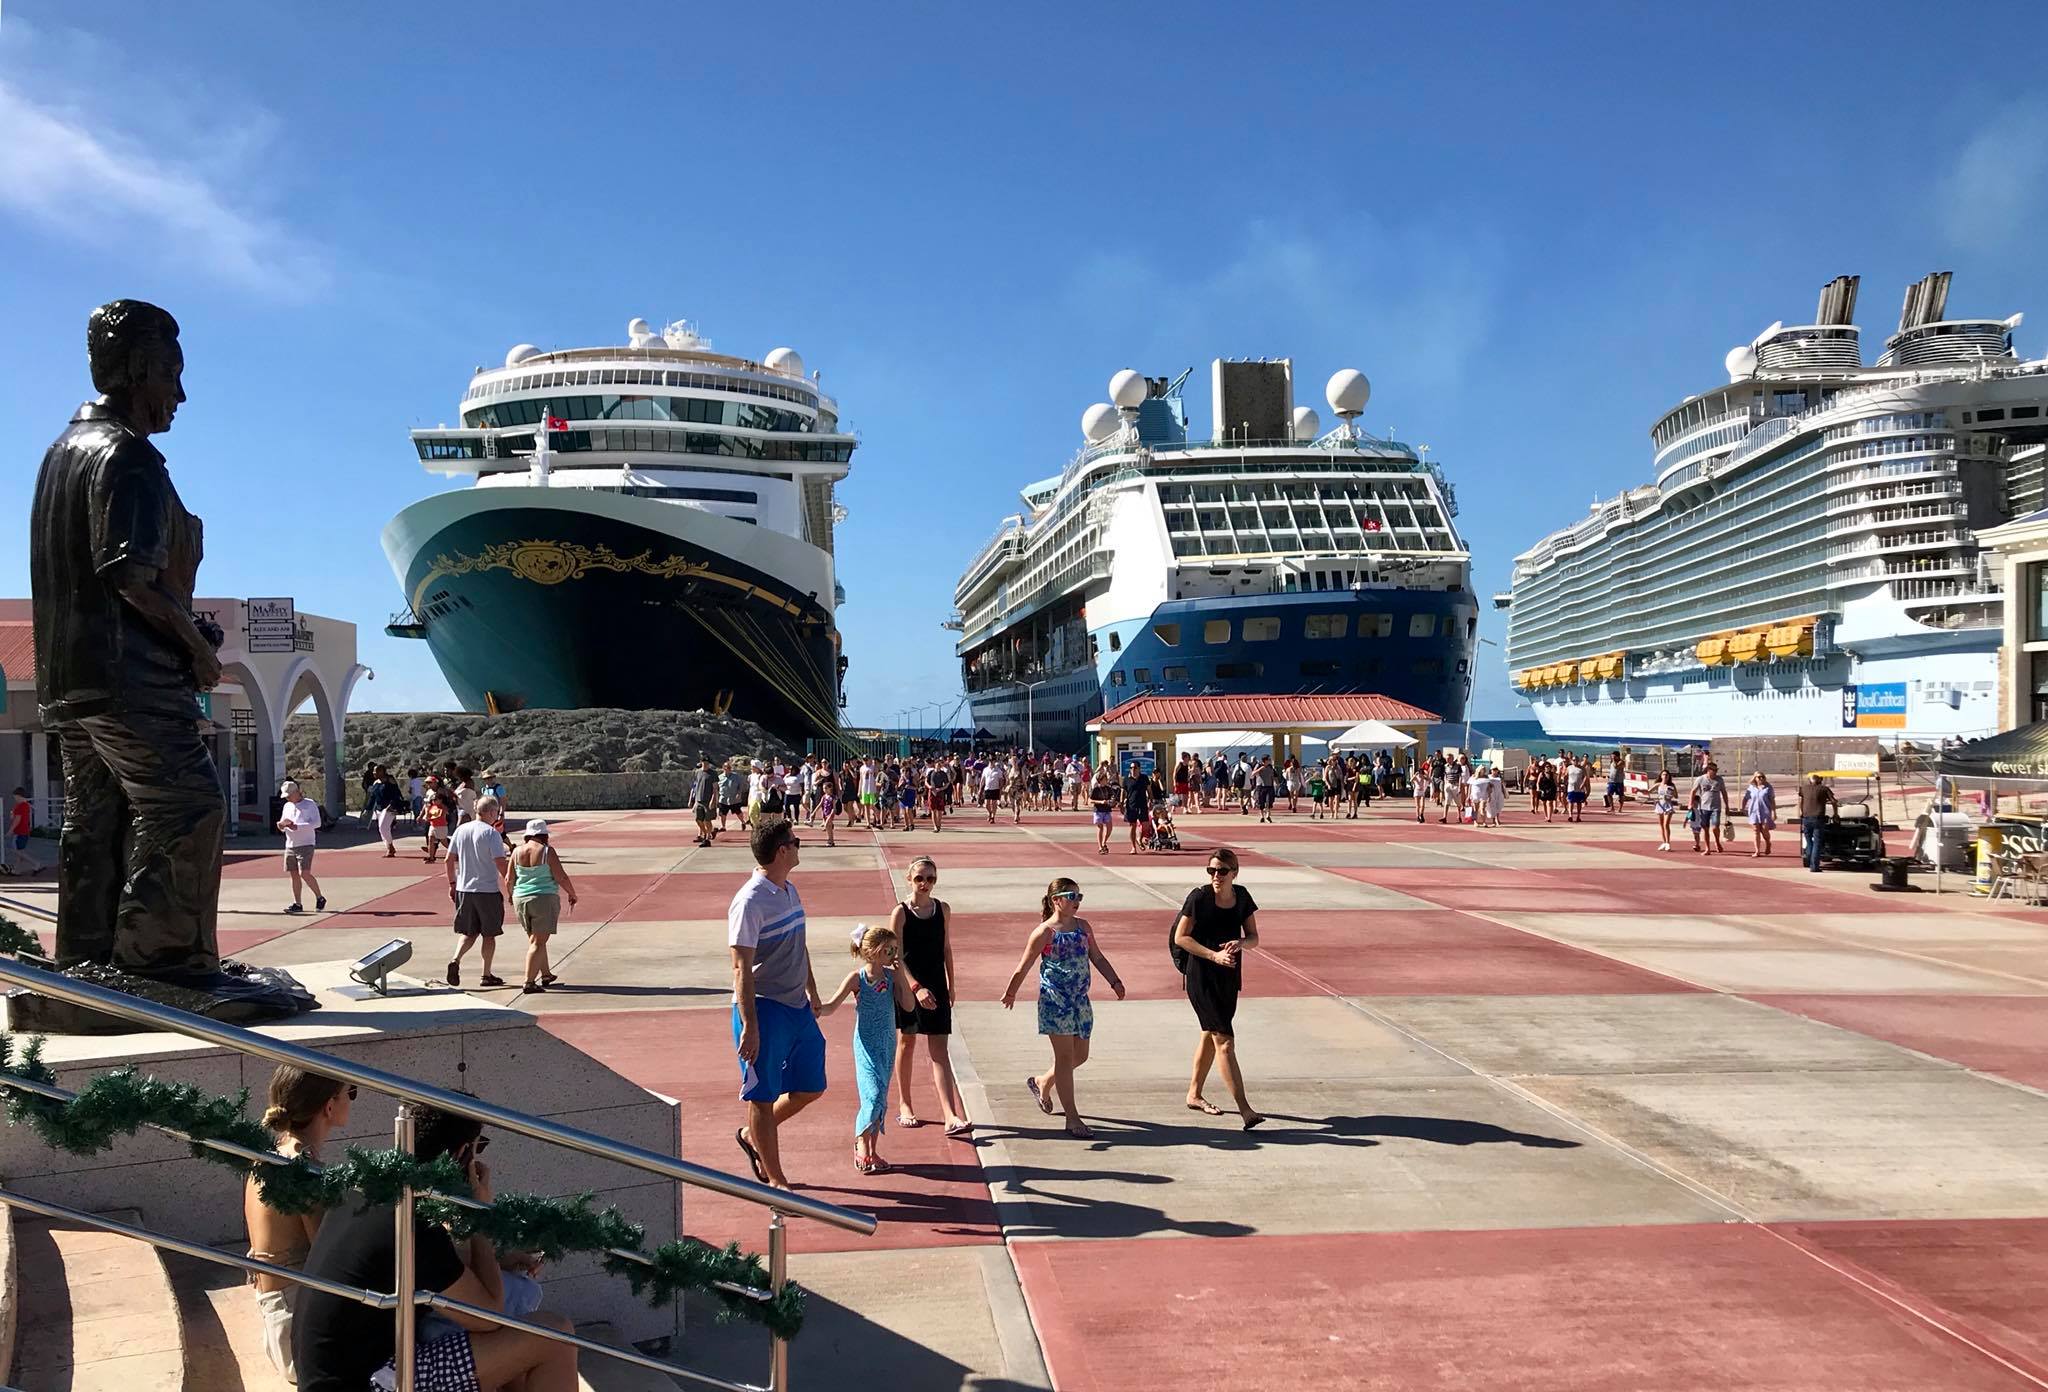 Three Cruise ships in port 02JAN 2018